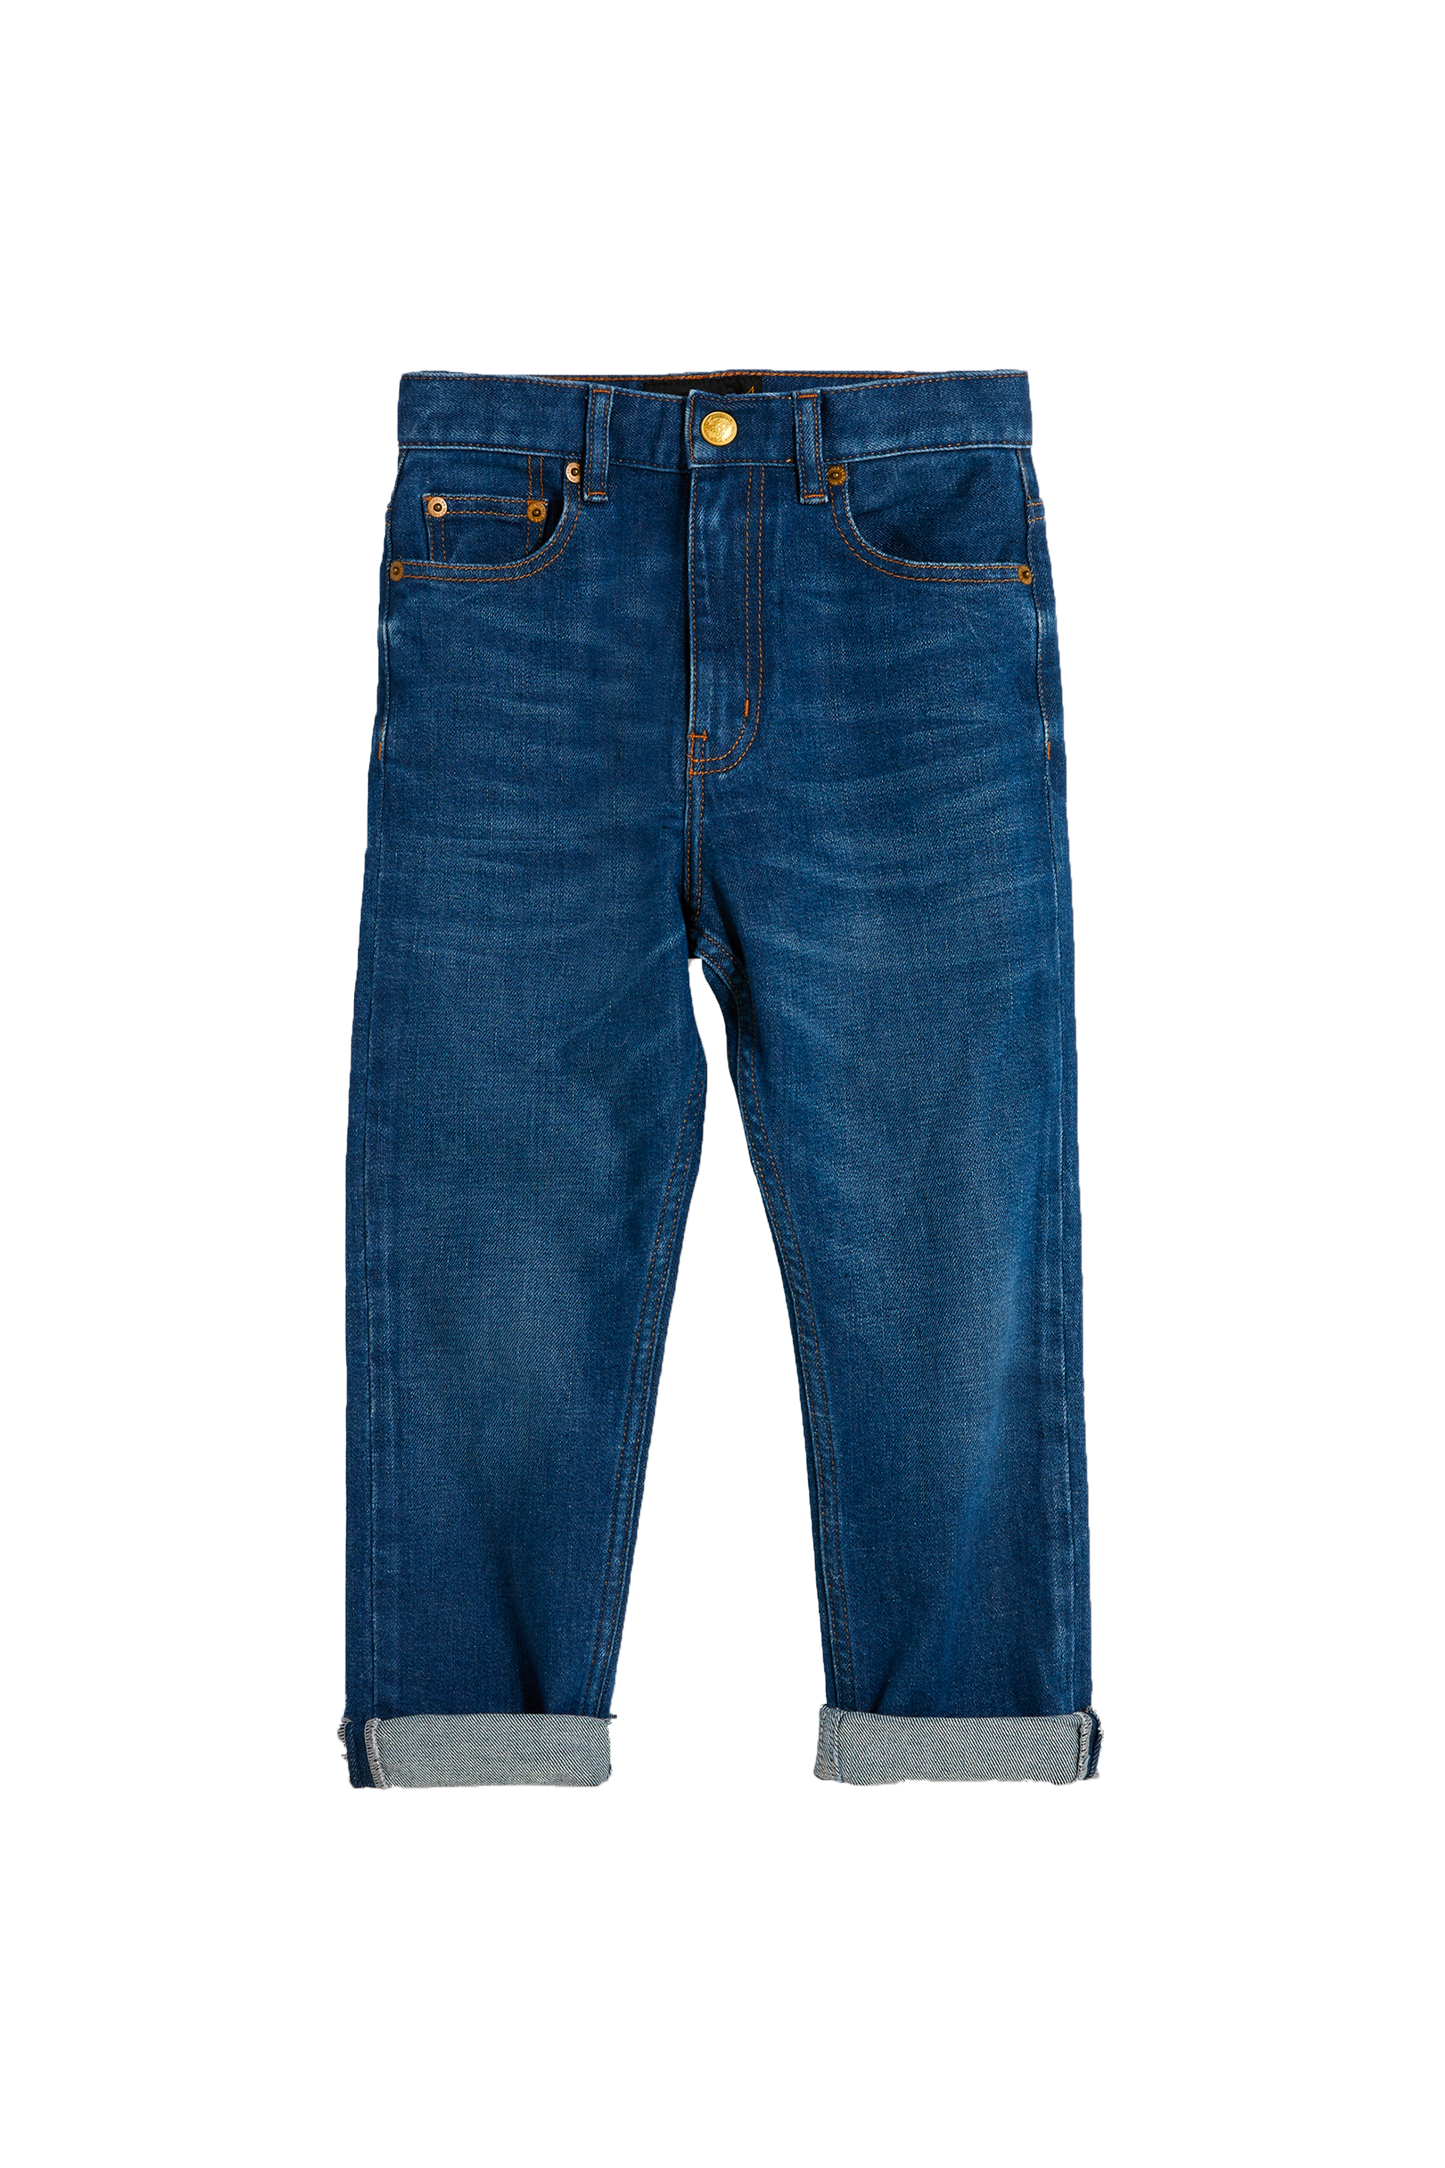 OLLIBIS Blue Denim - 5-Pocket Tapered Fit Jeans